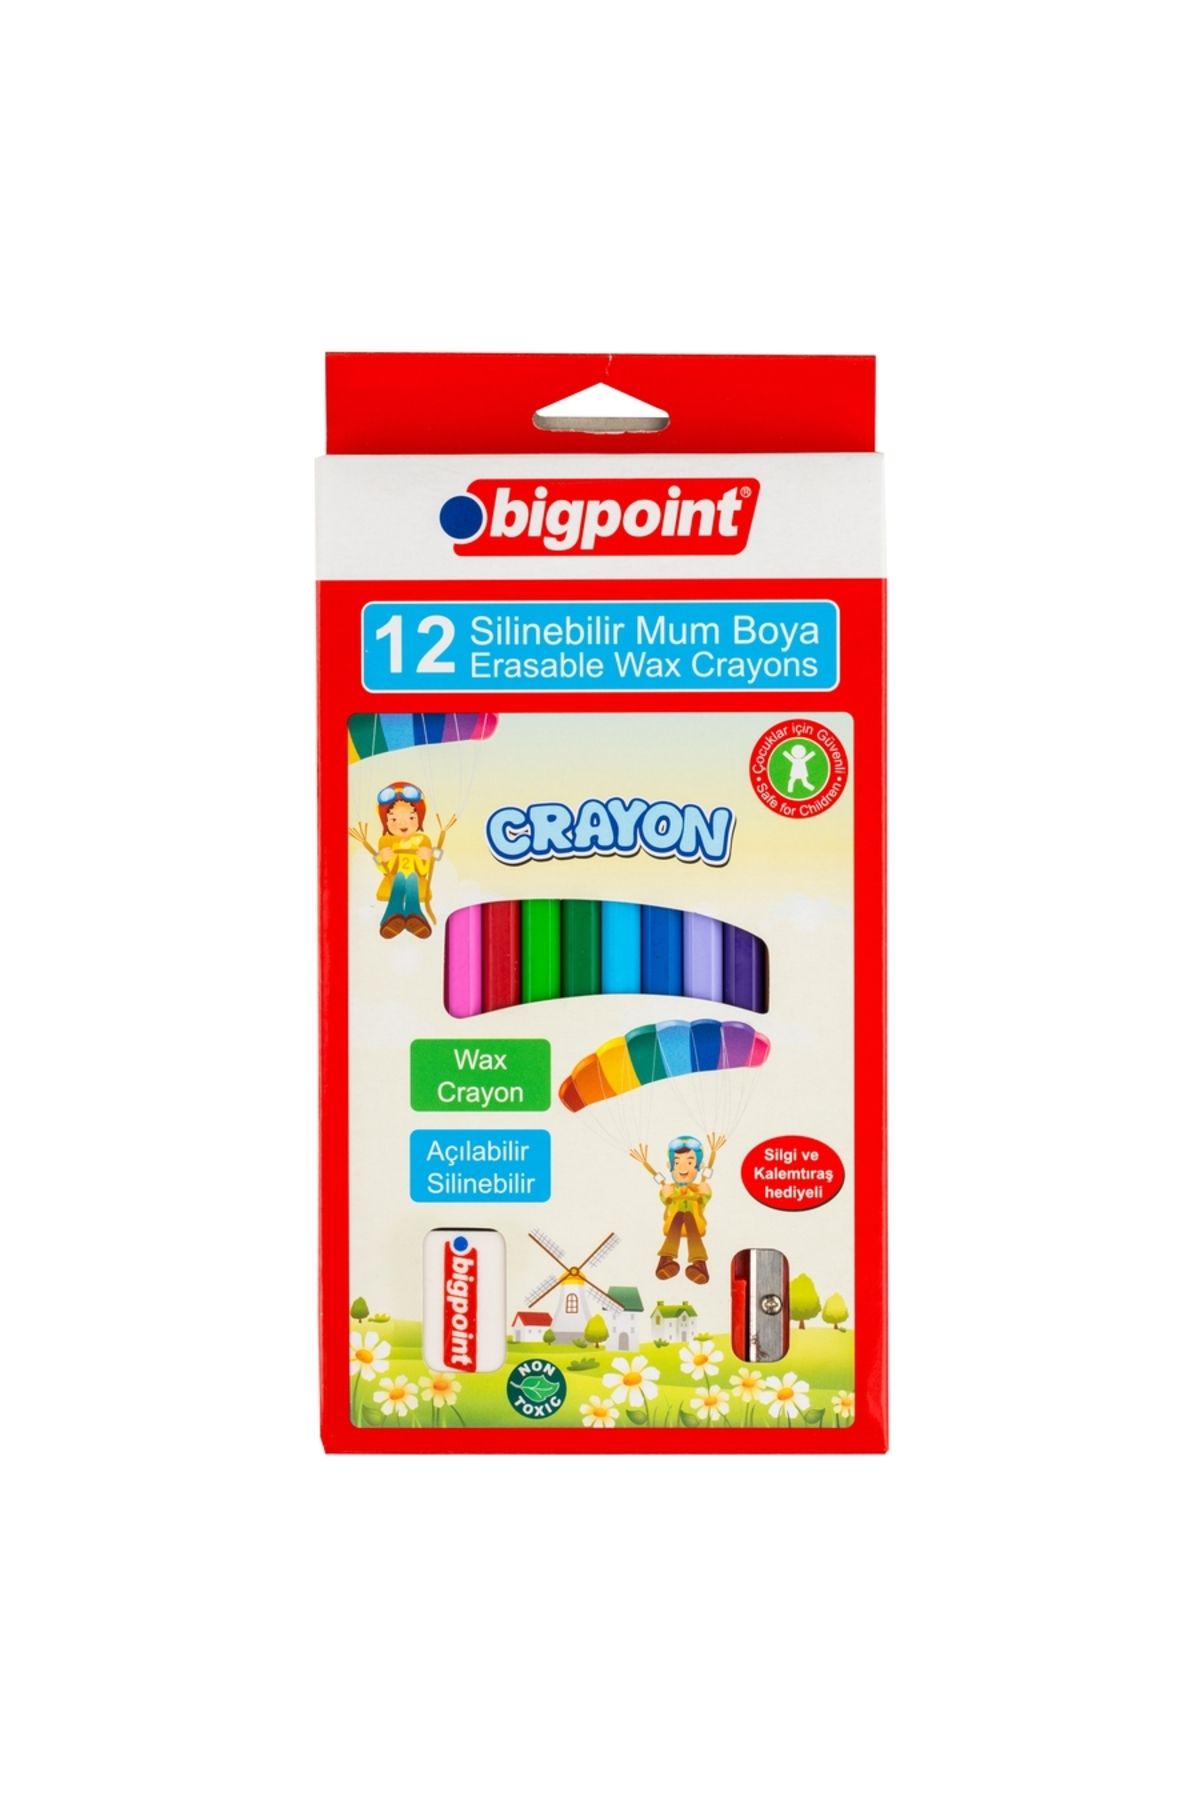 Bigpoint Wax Crayon Silinebilir Mum Boya 12 Renk